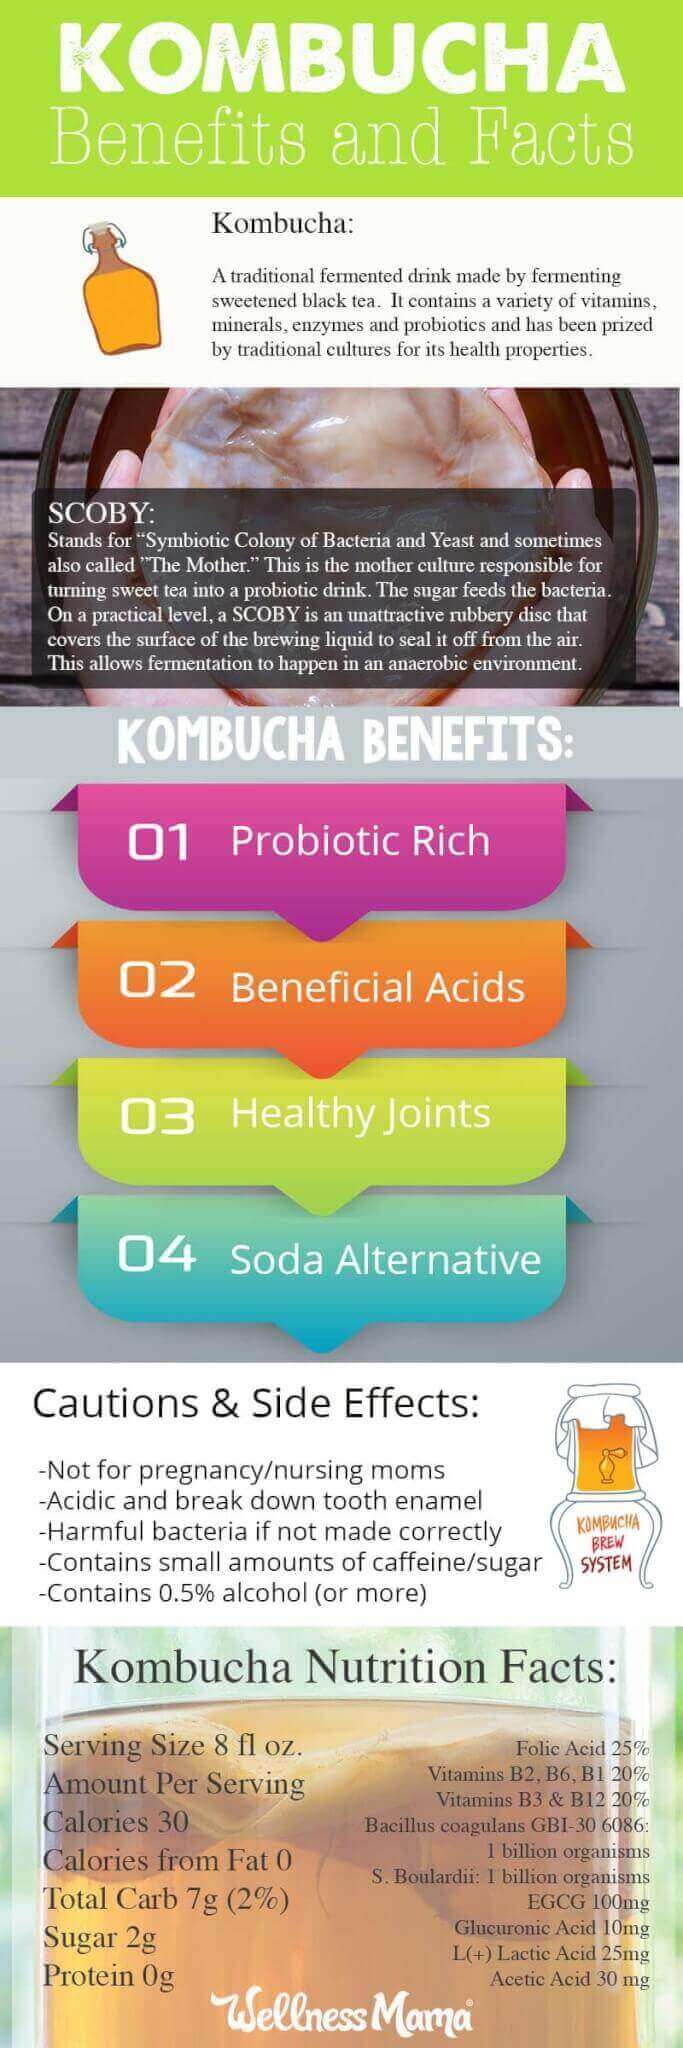 Kombucha Benefits and Facts Infographic